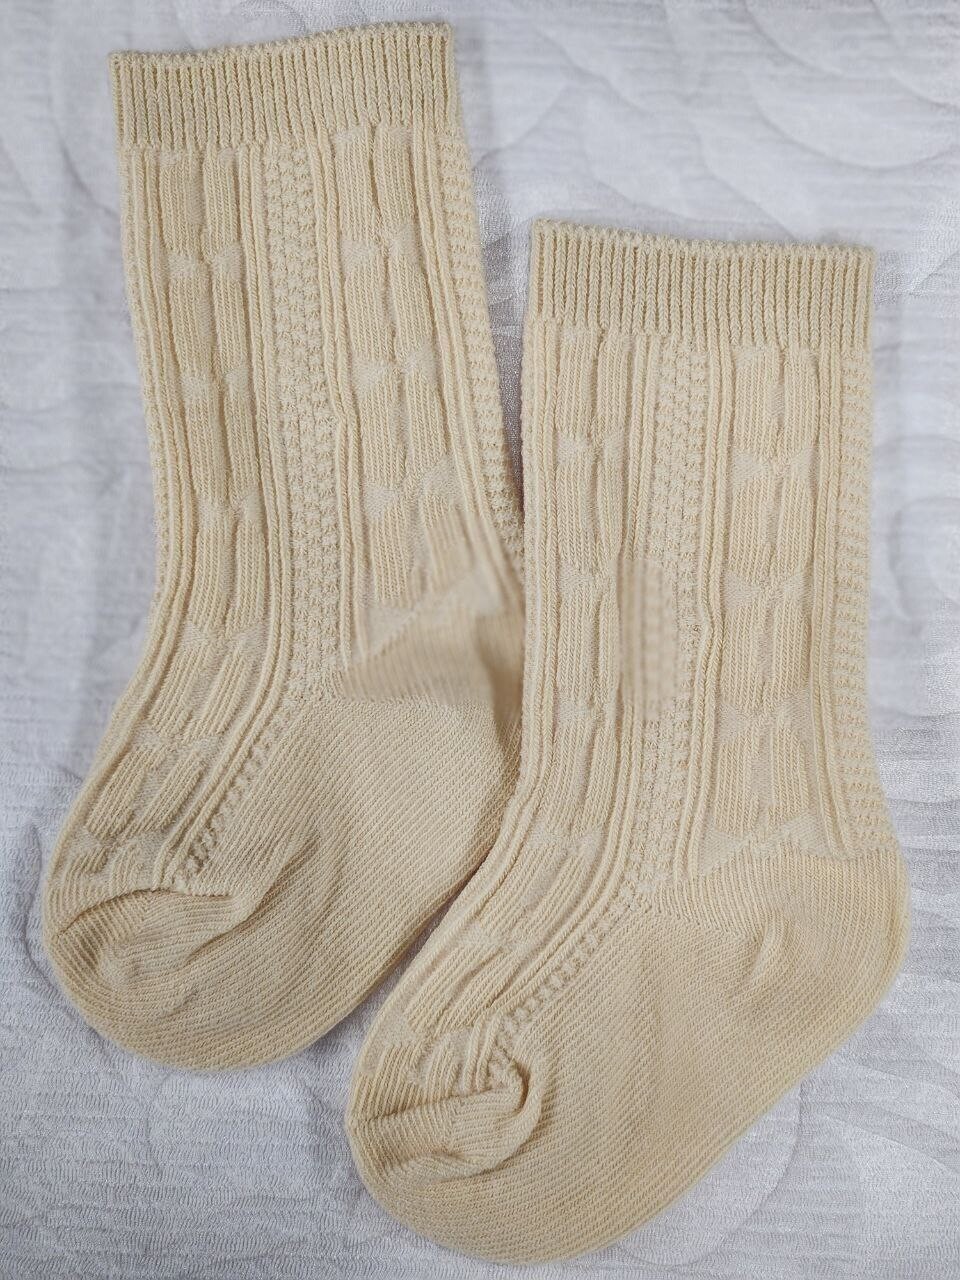 0-6 mo. Cream Socks 